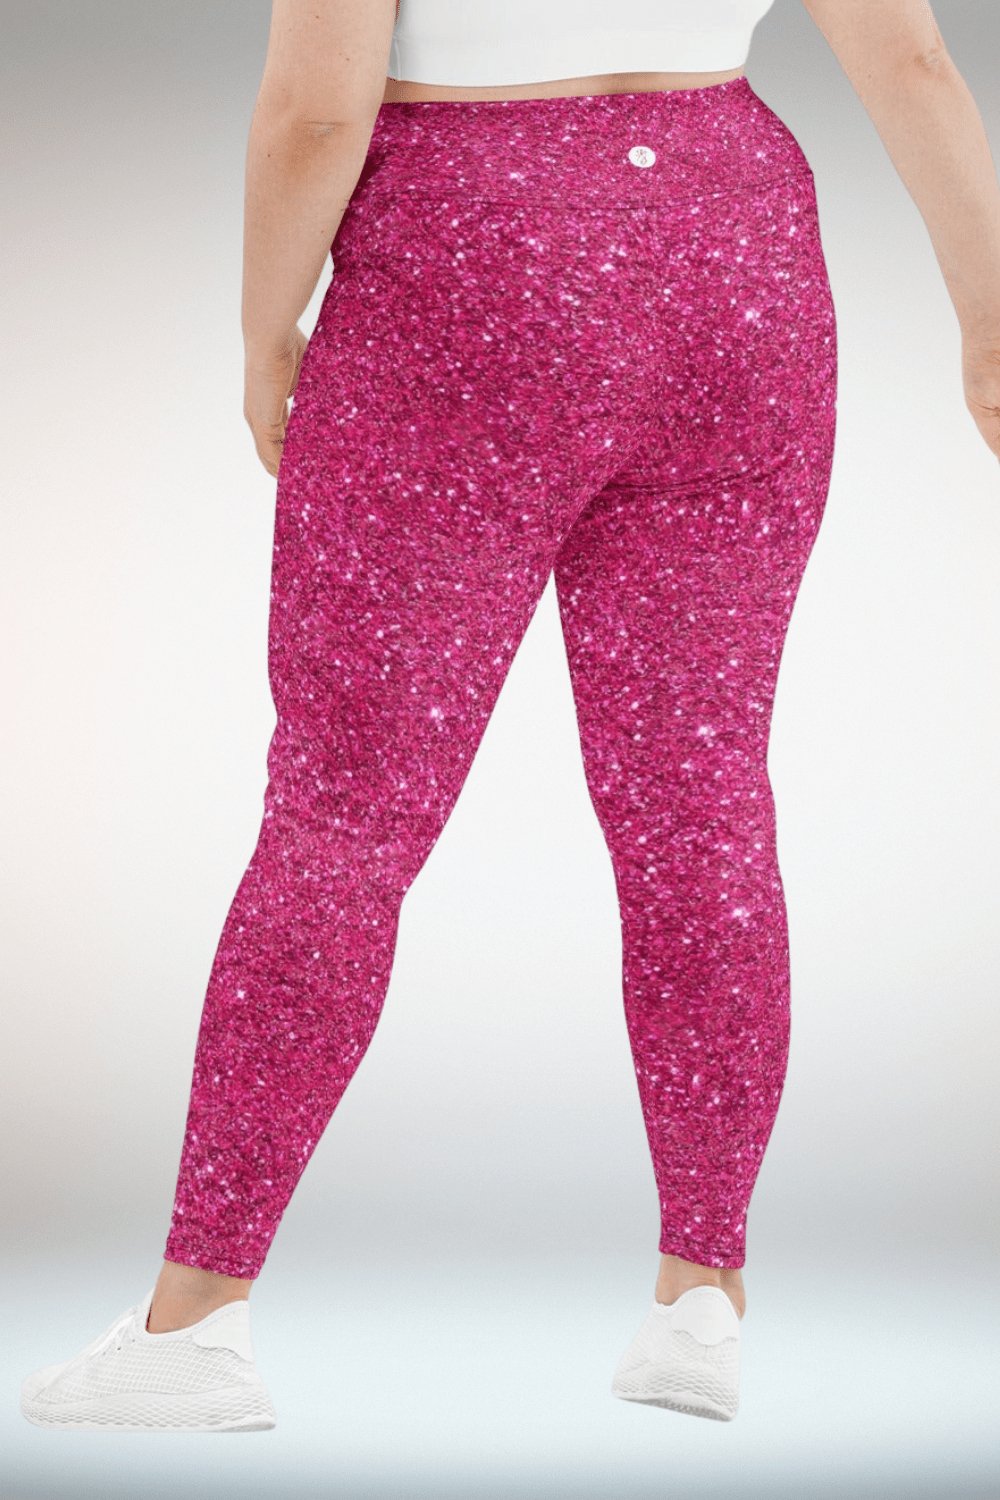 Hot Pink Glitter Print Plus Size Leggings - TGC Boutique - Leggings